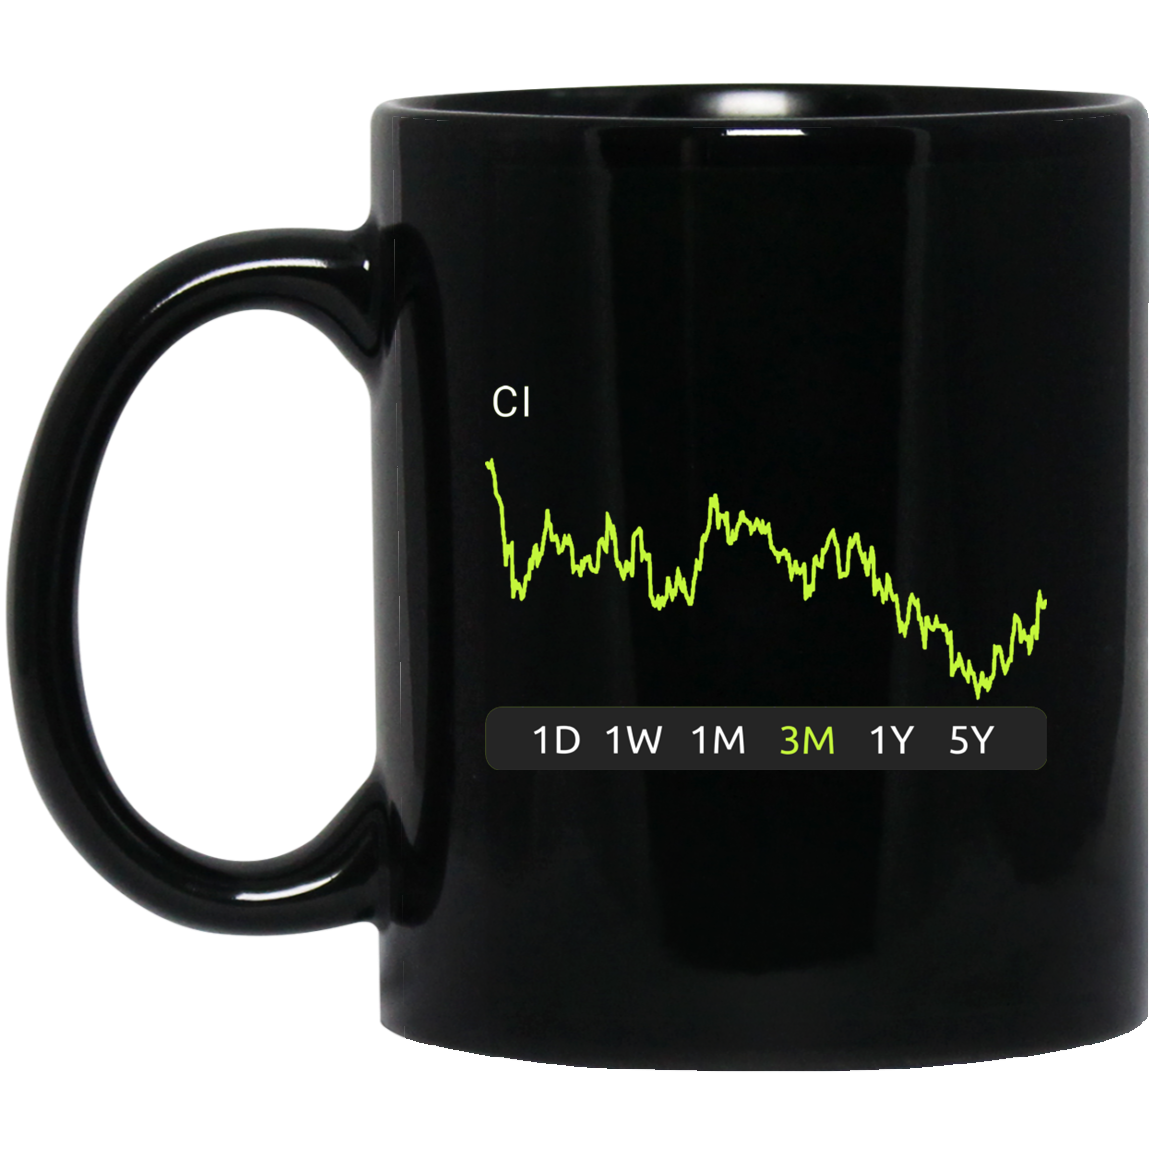 CI Stock 3m Mug